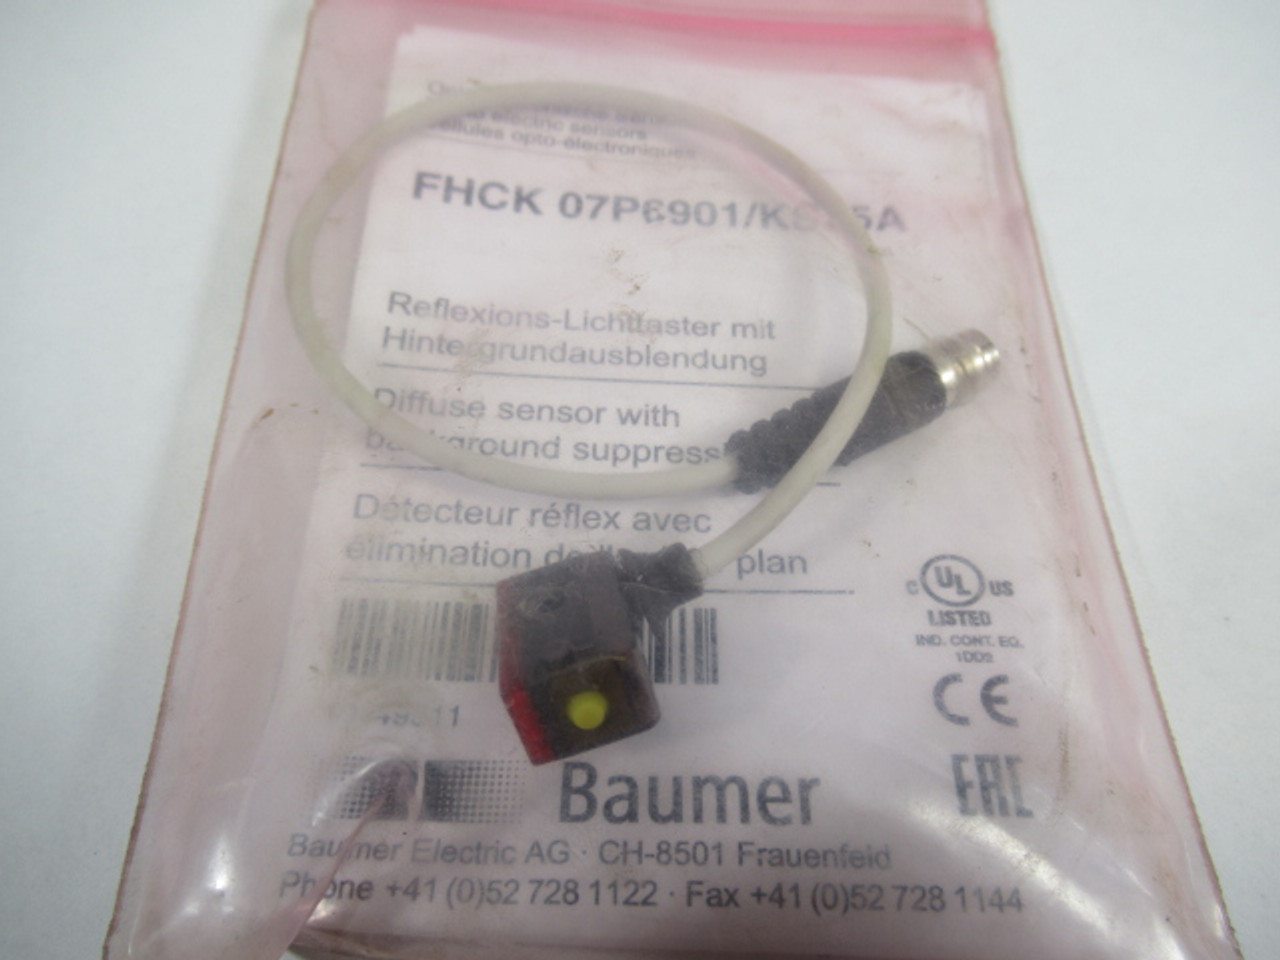 Baumer FHCK-07P6901/KS35A Diffuse Sensor 10-60mm ! NWB !